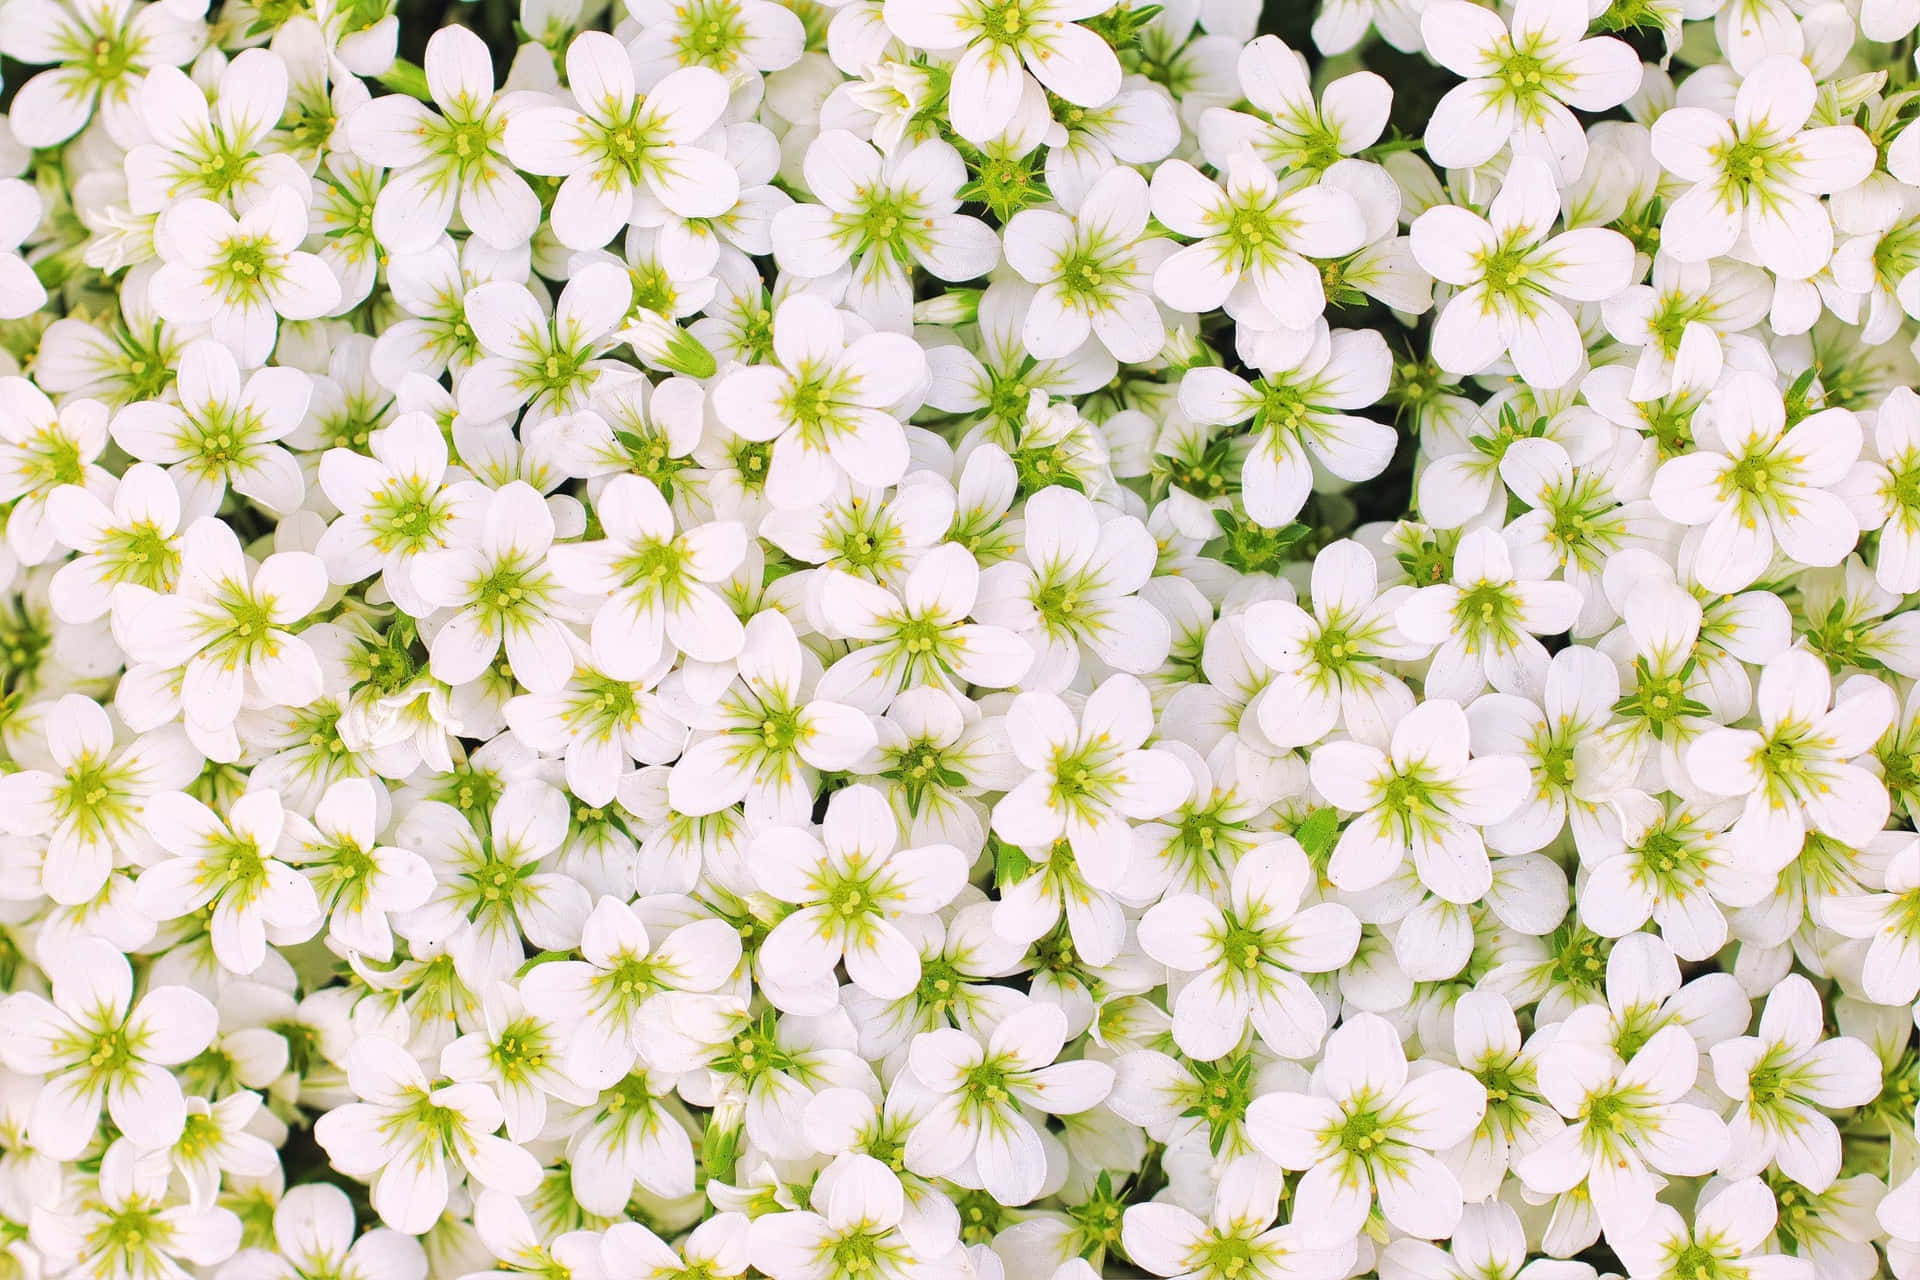 Delightful White Flowers Bloom in the Garden